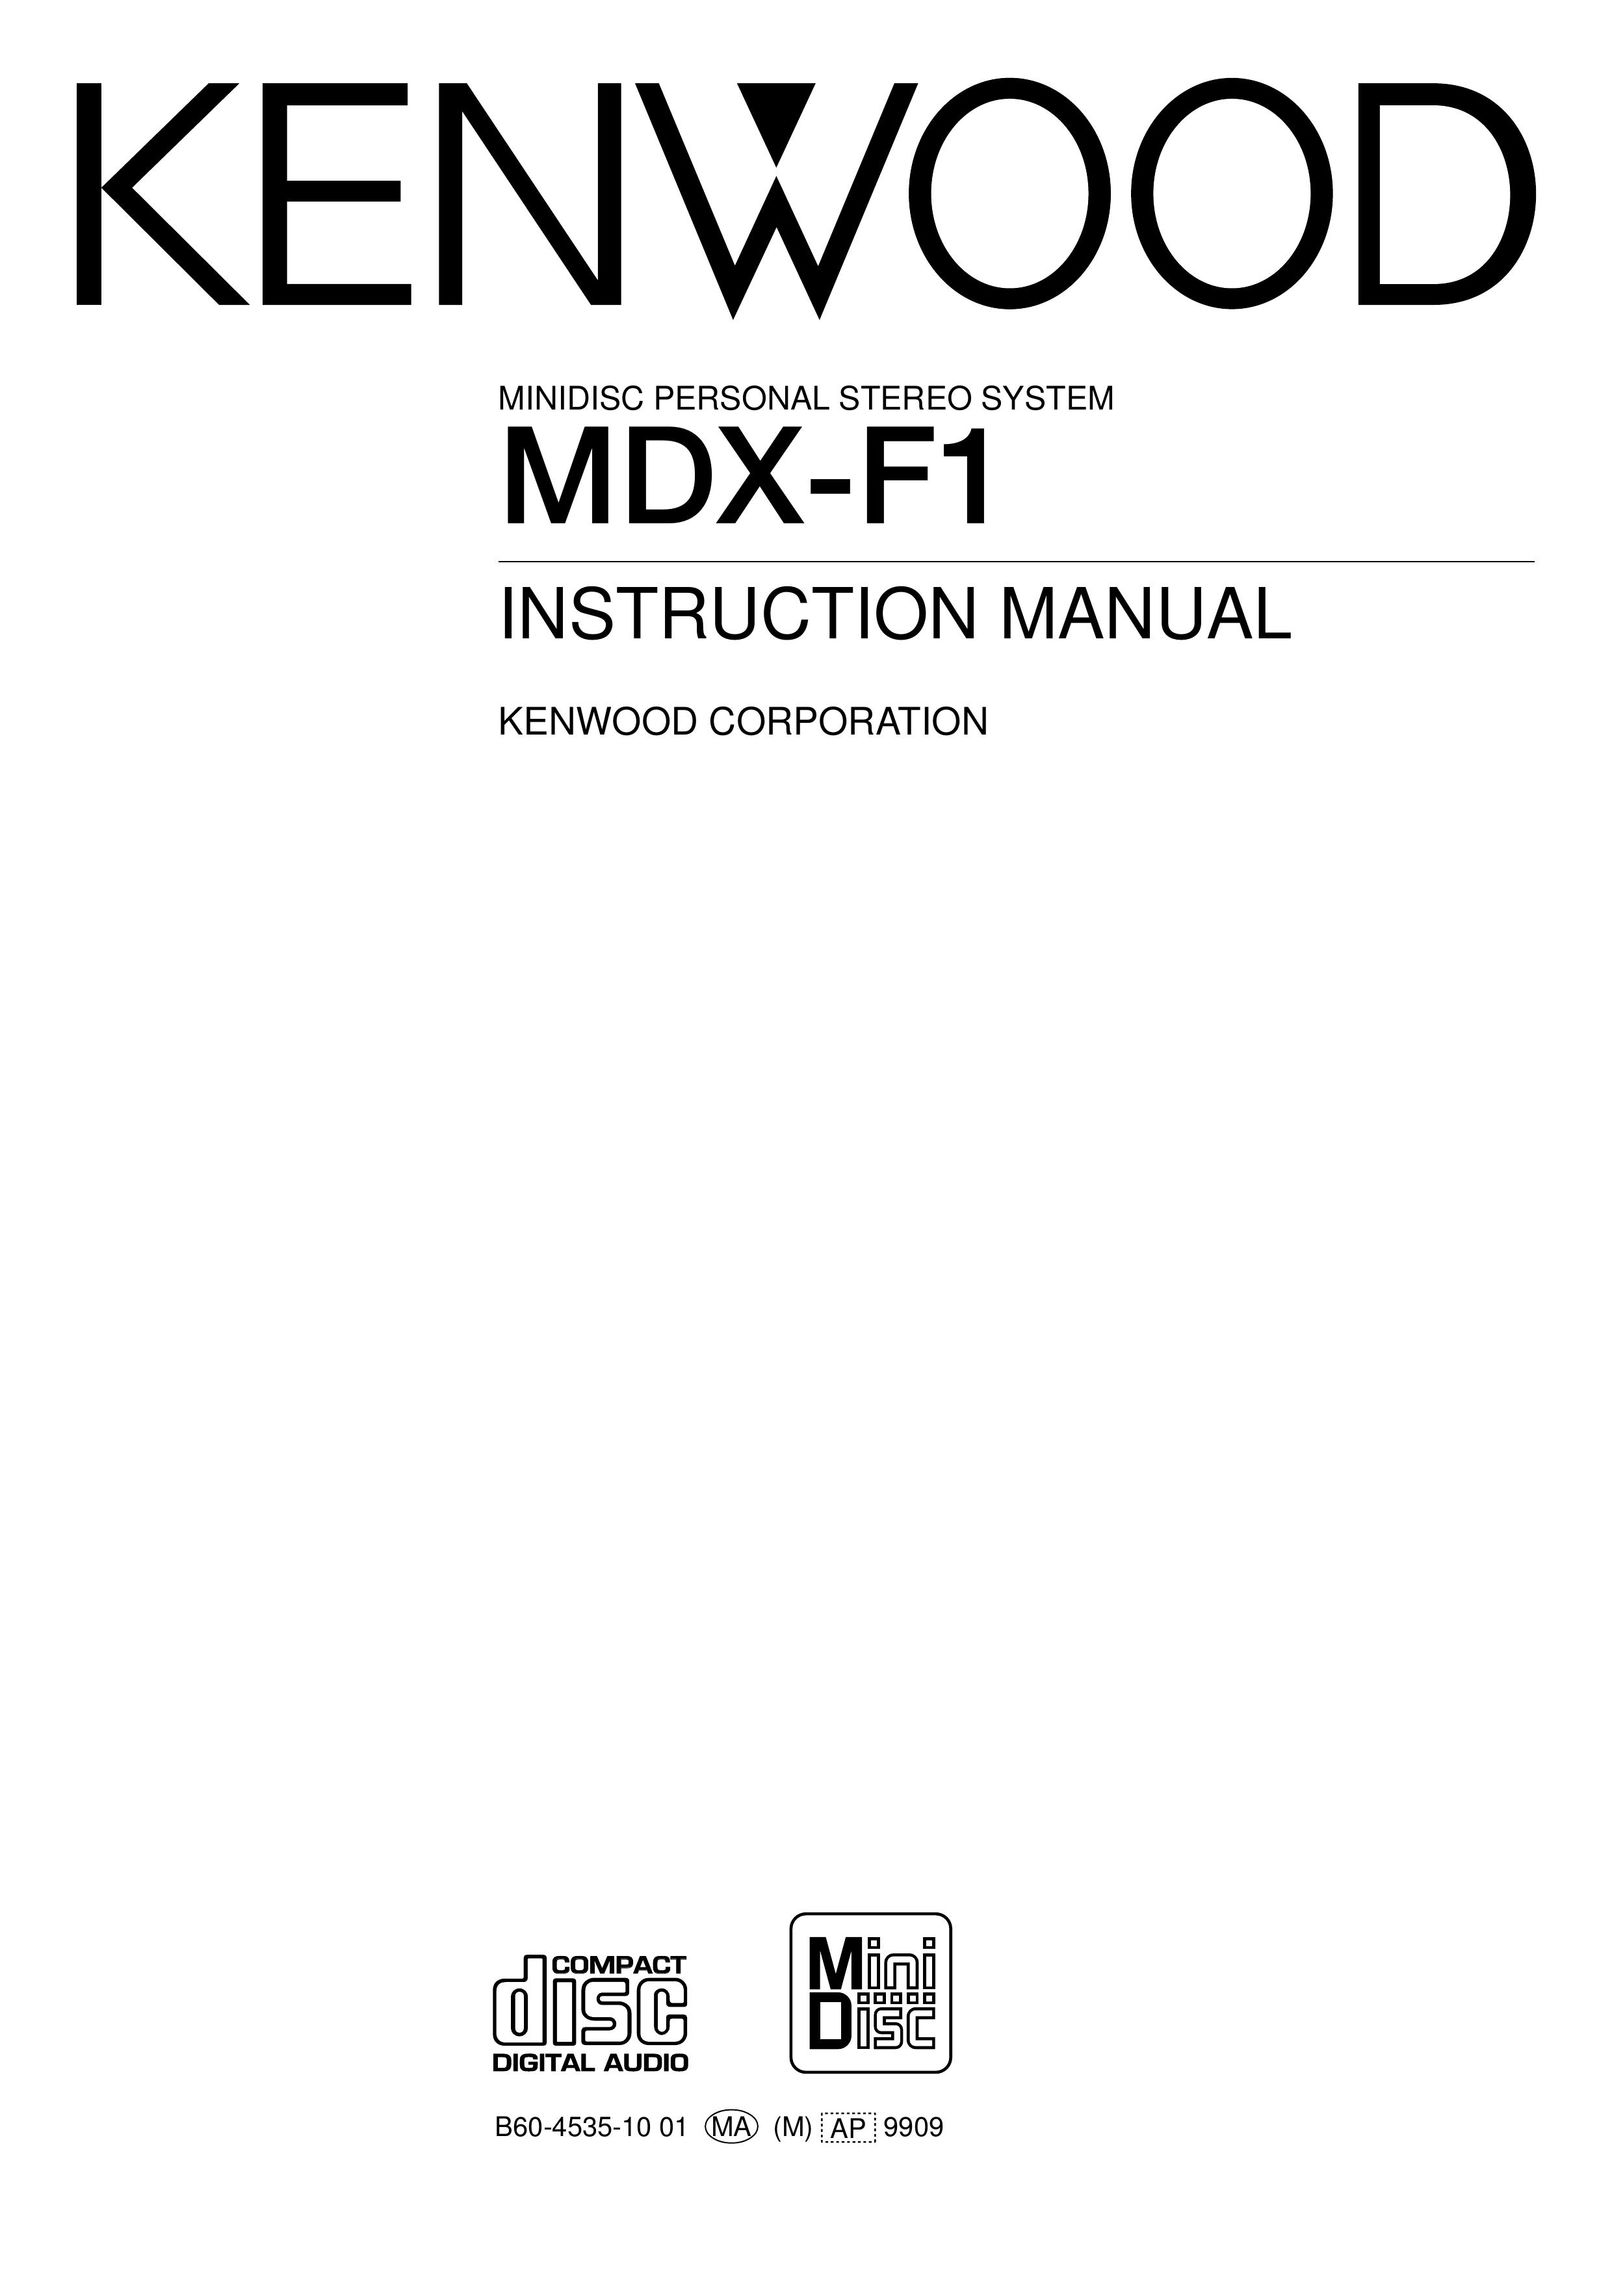 Kenwood MDX-F1 Portable Radio User Manual